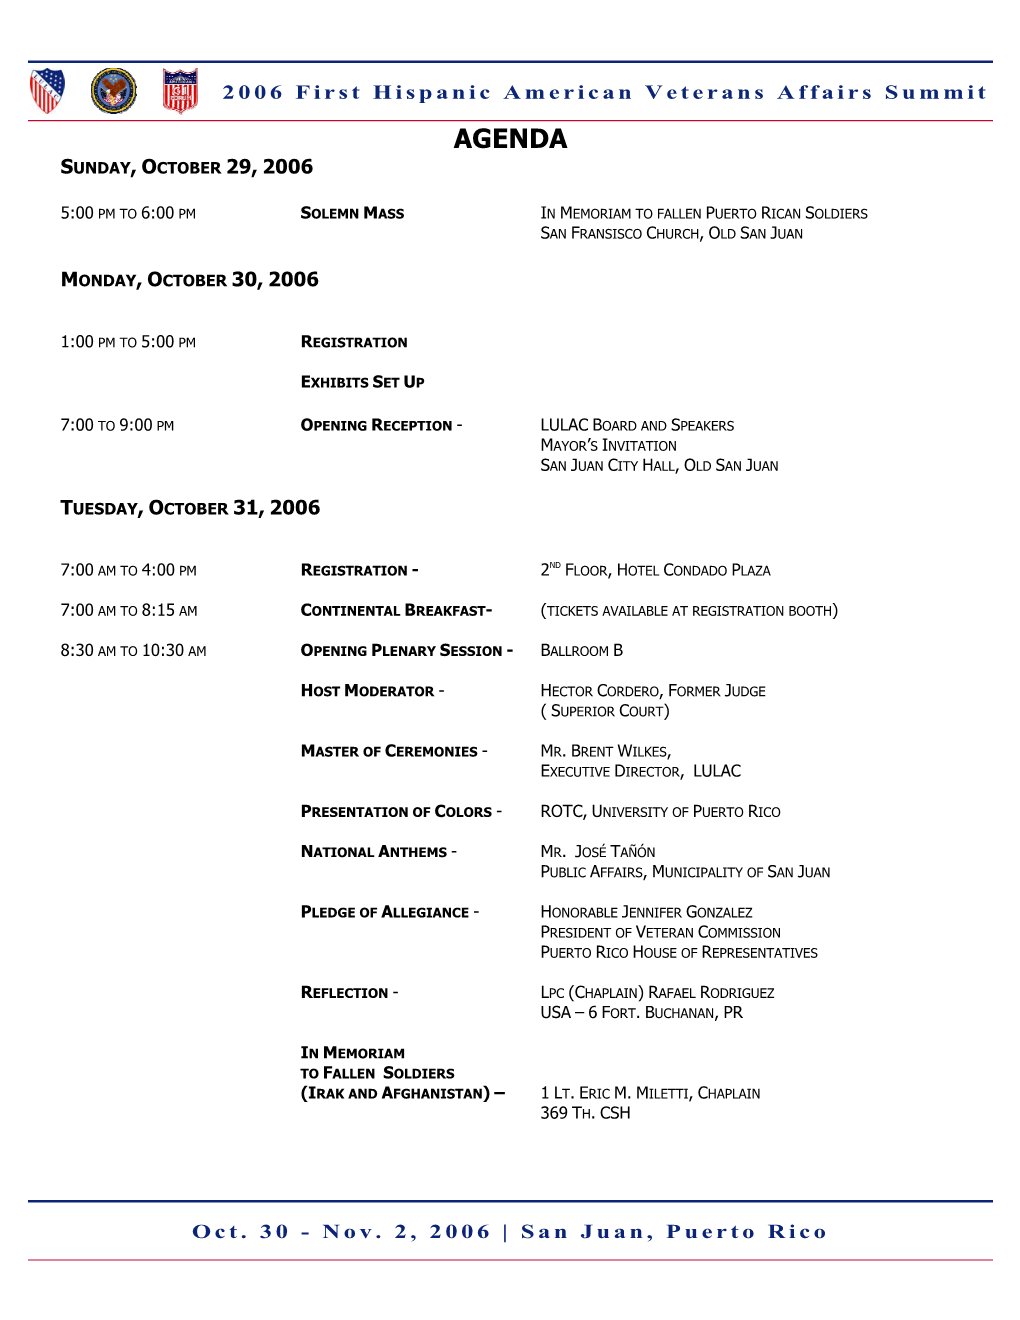 Agenda Sunday, October 29, 2006